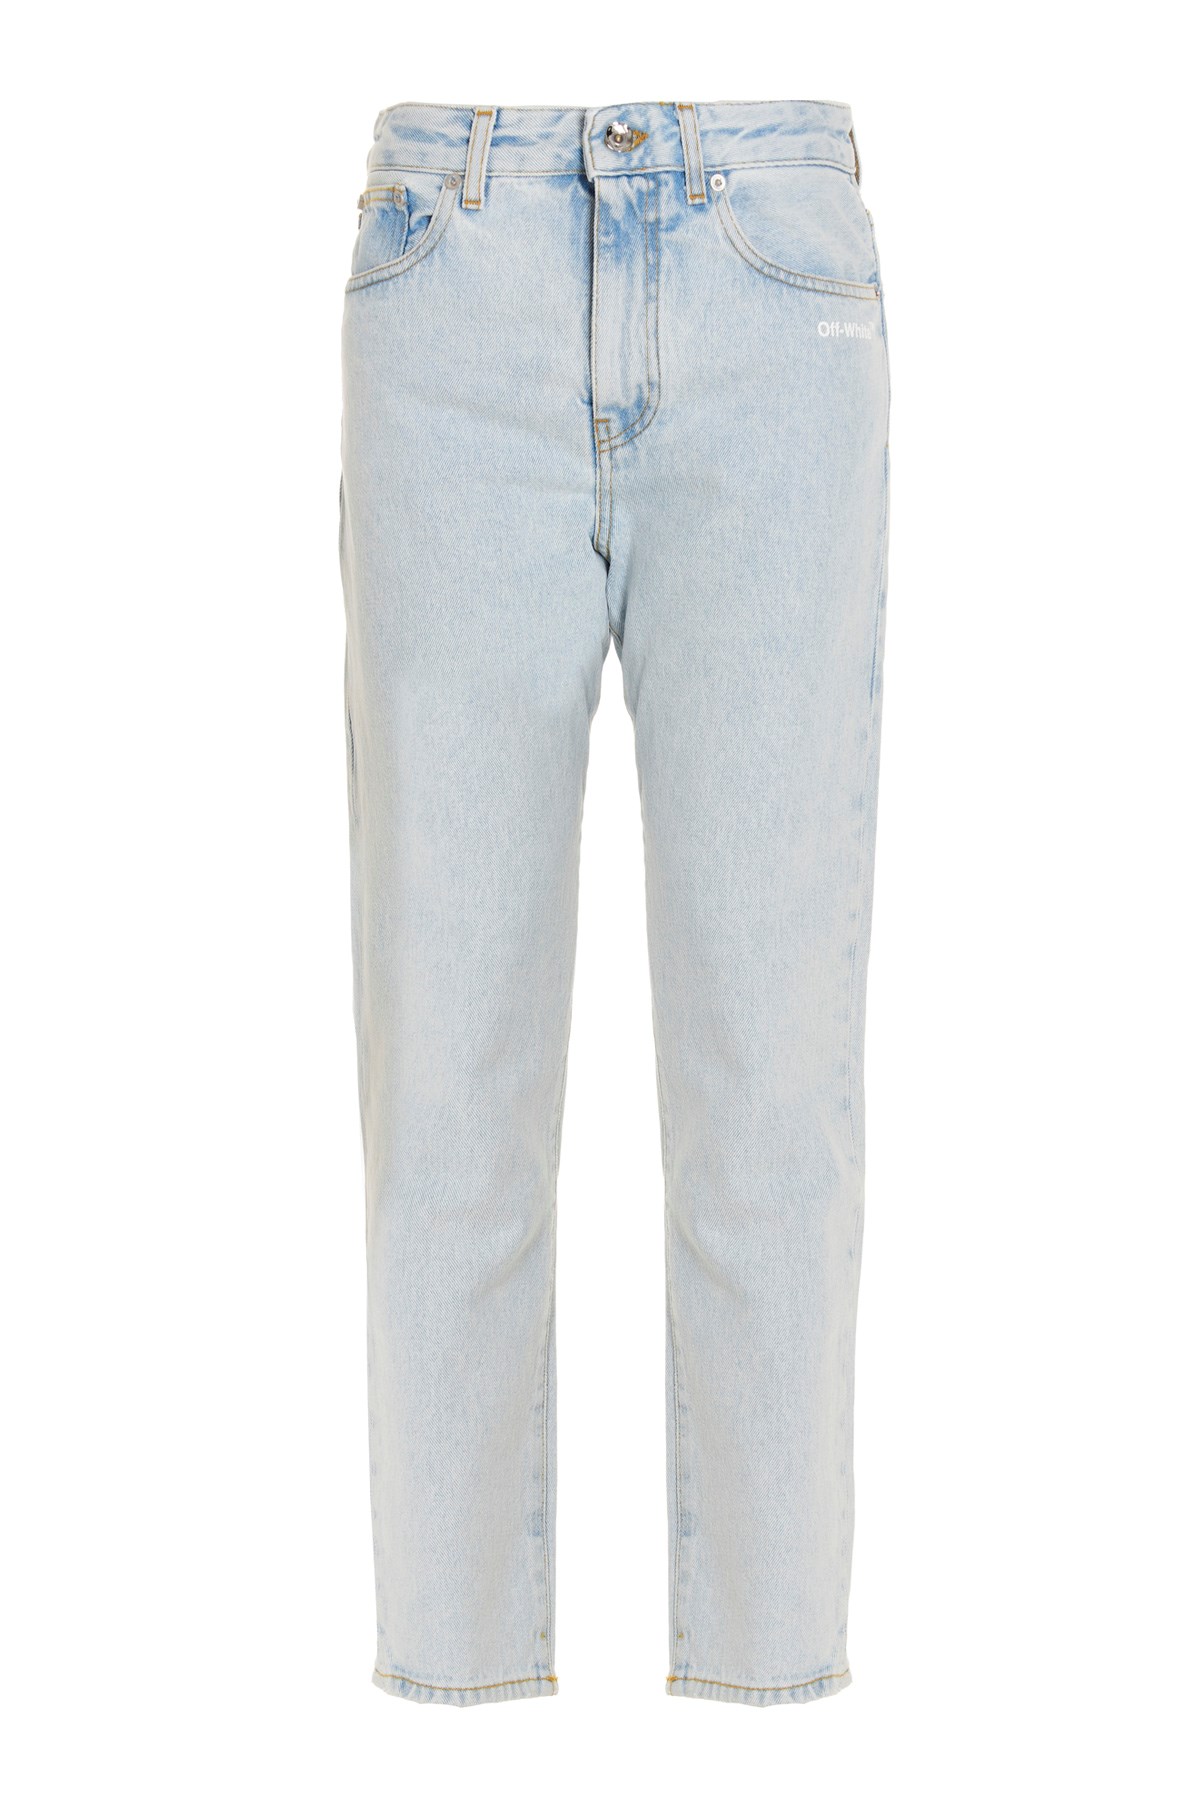 OFF-WHITE Jeans 'Diag'